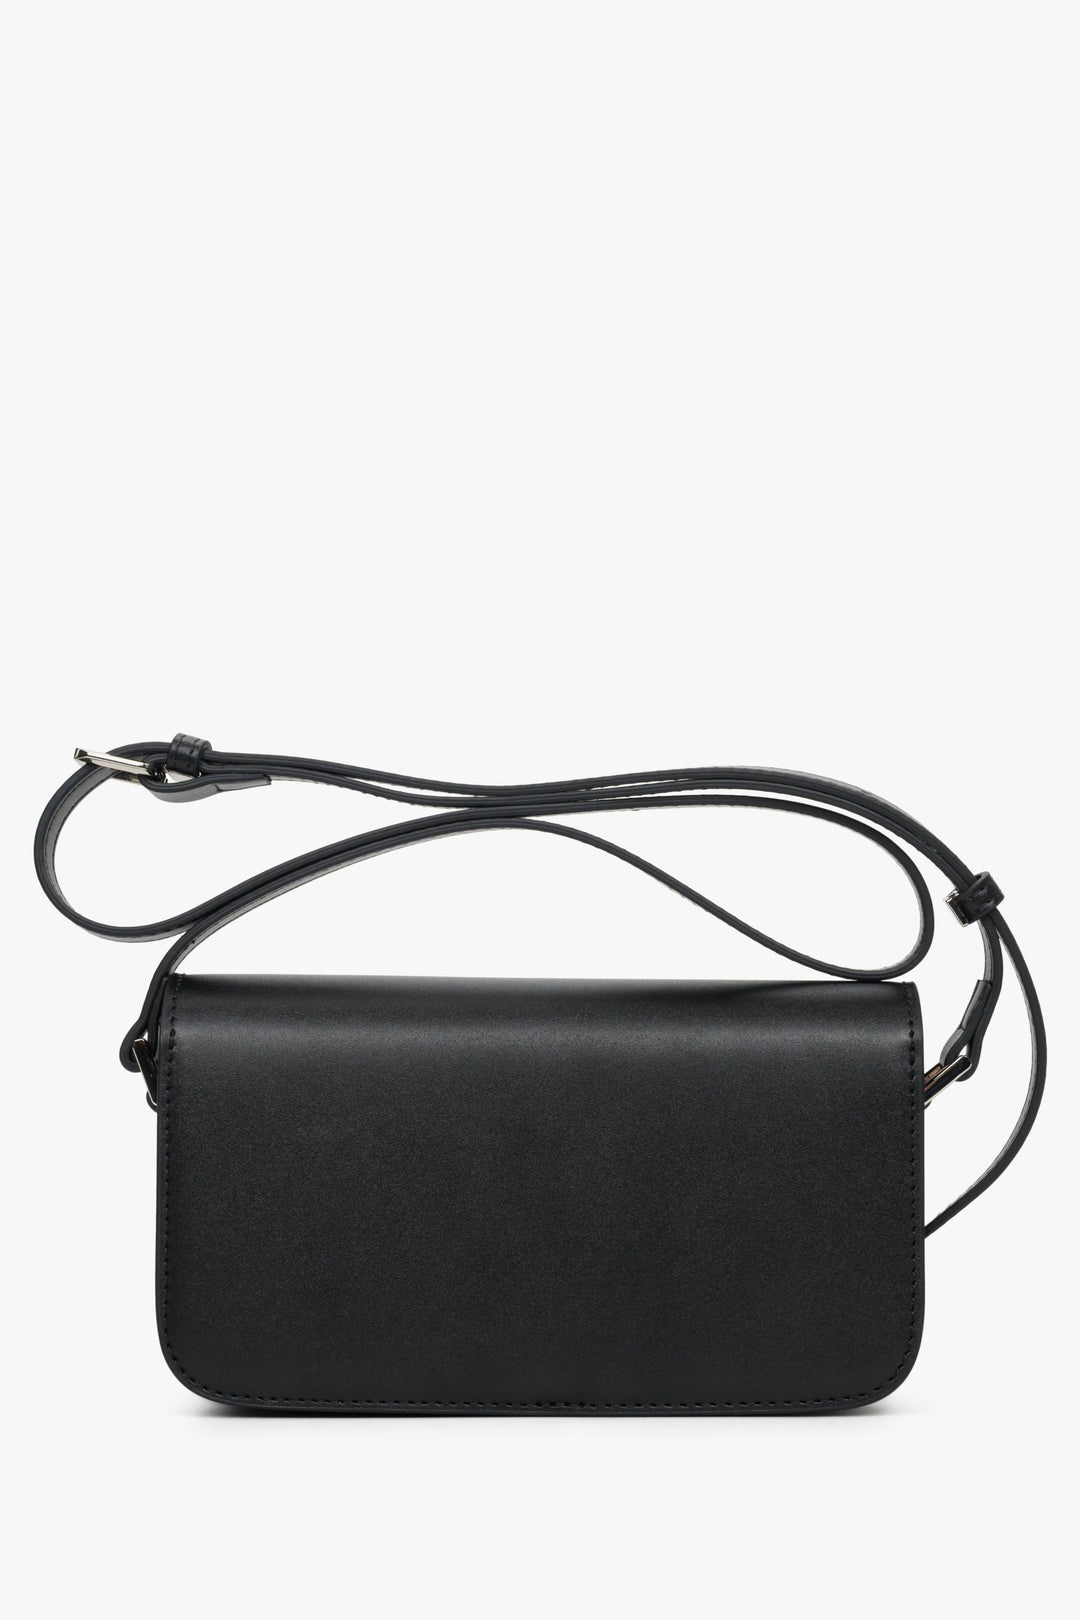 Leather, women's black handbag Estro - reverse side.